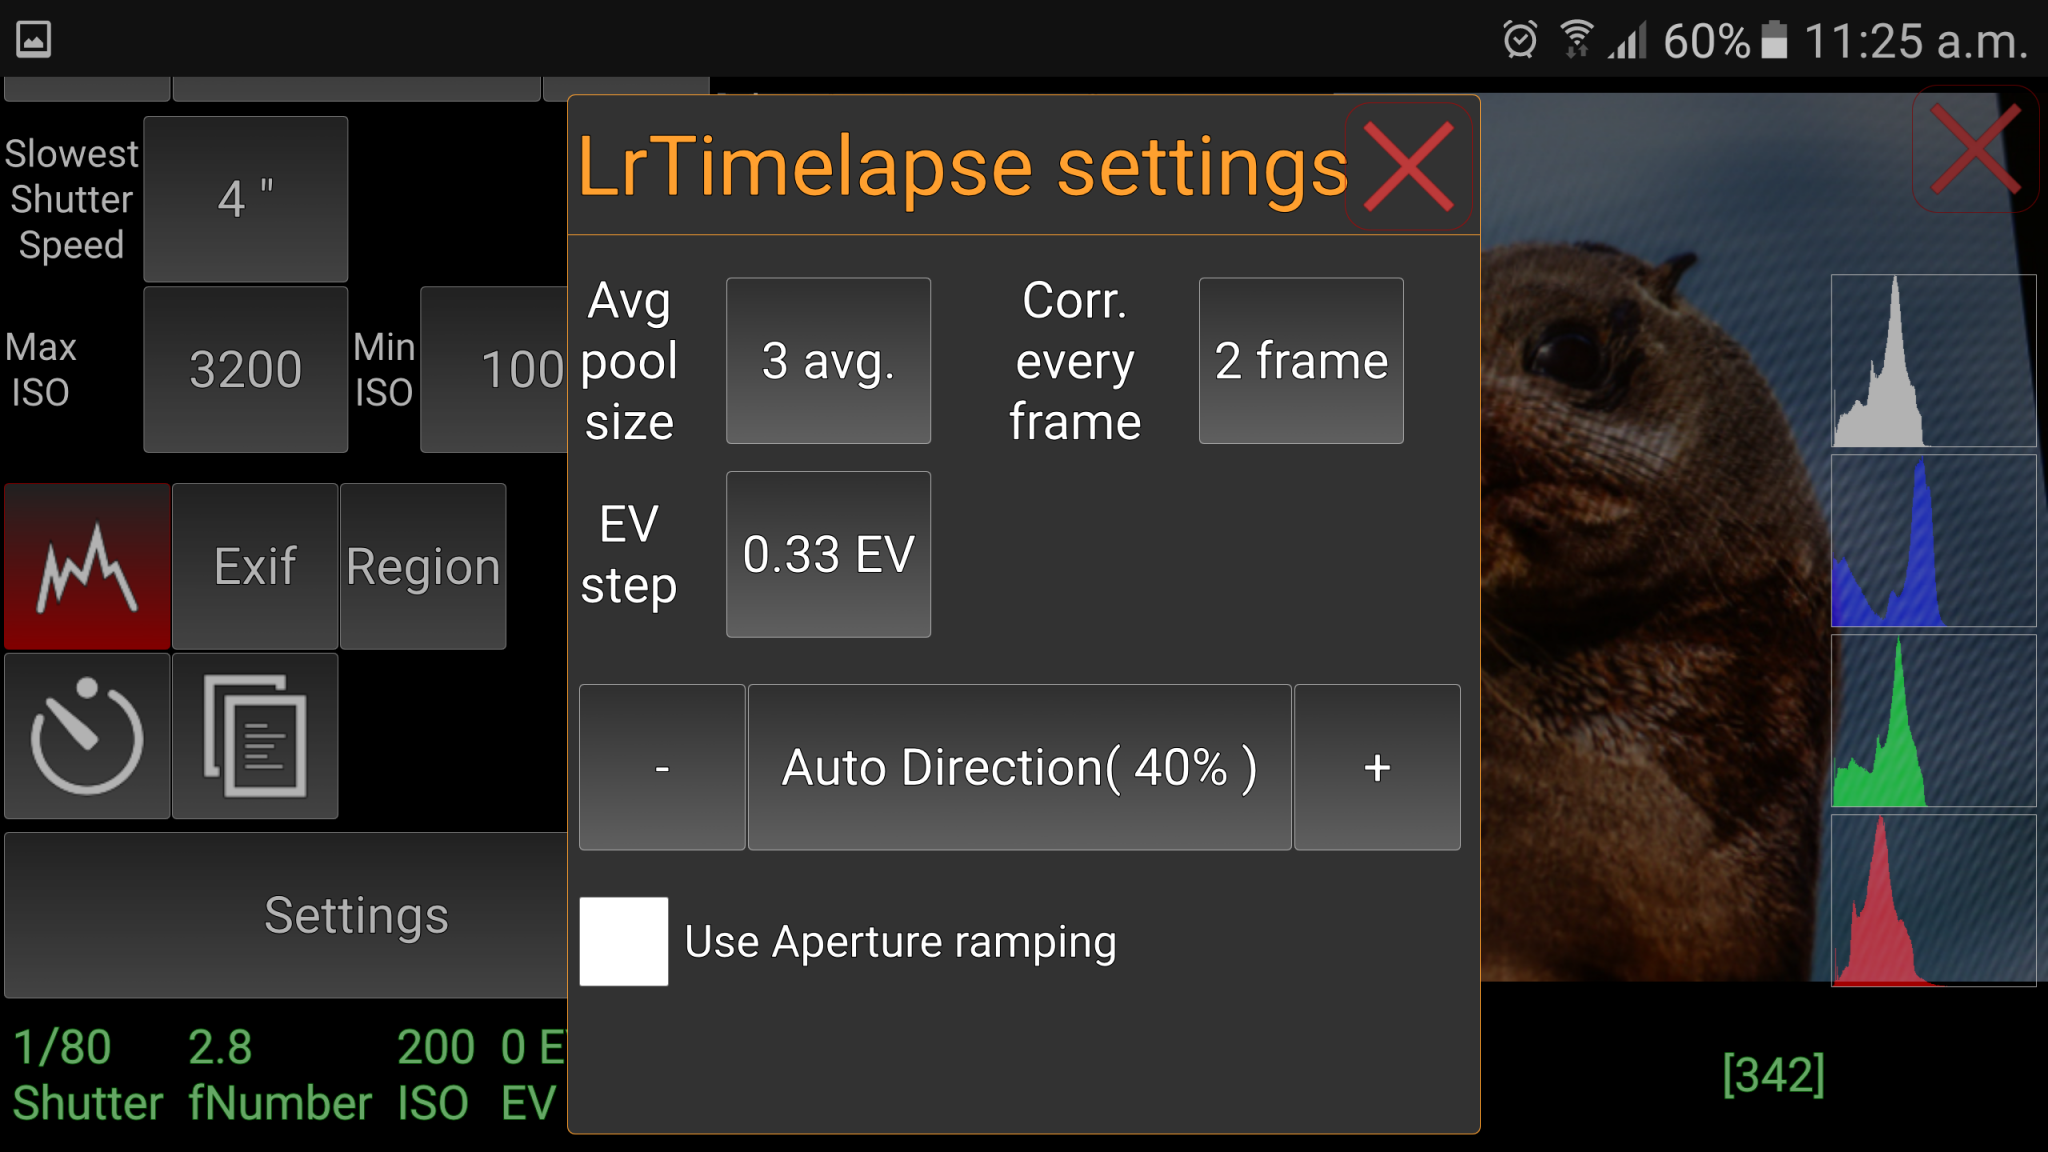 qDSLR Dasboard LRTimelapse mode with settings